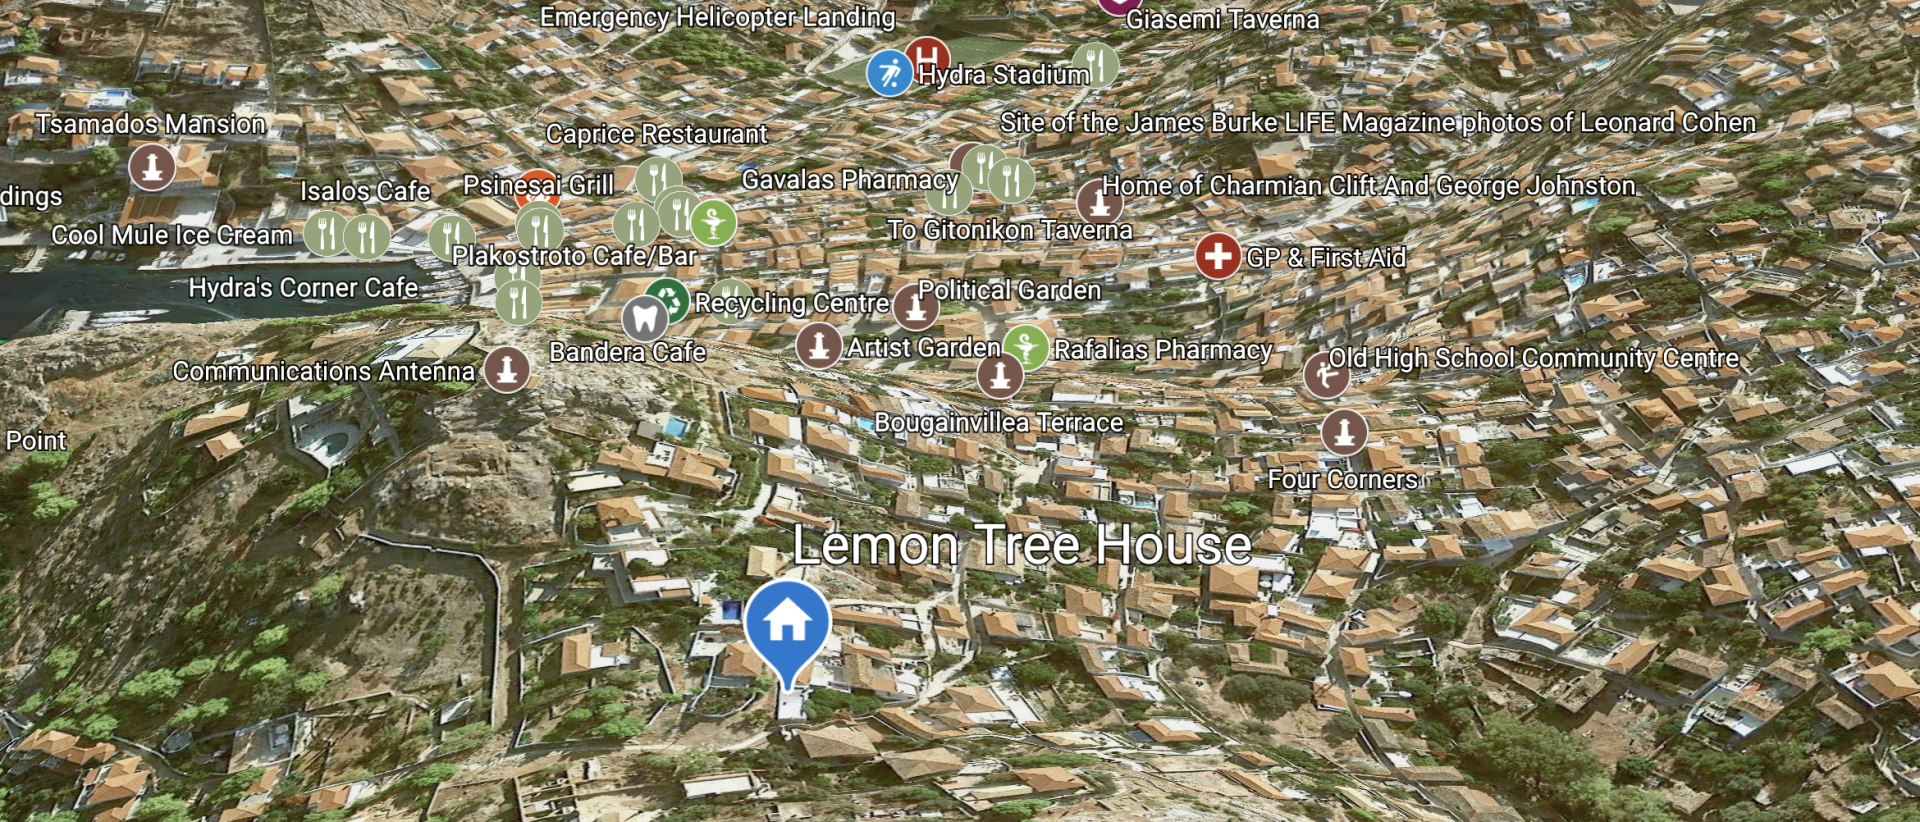 Location Map for Lemon Tree House on Hydra Island Greece